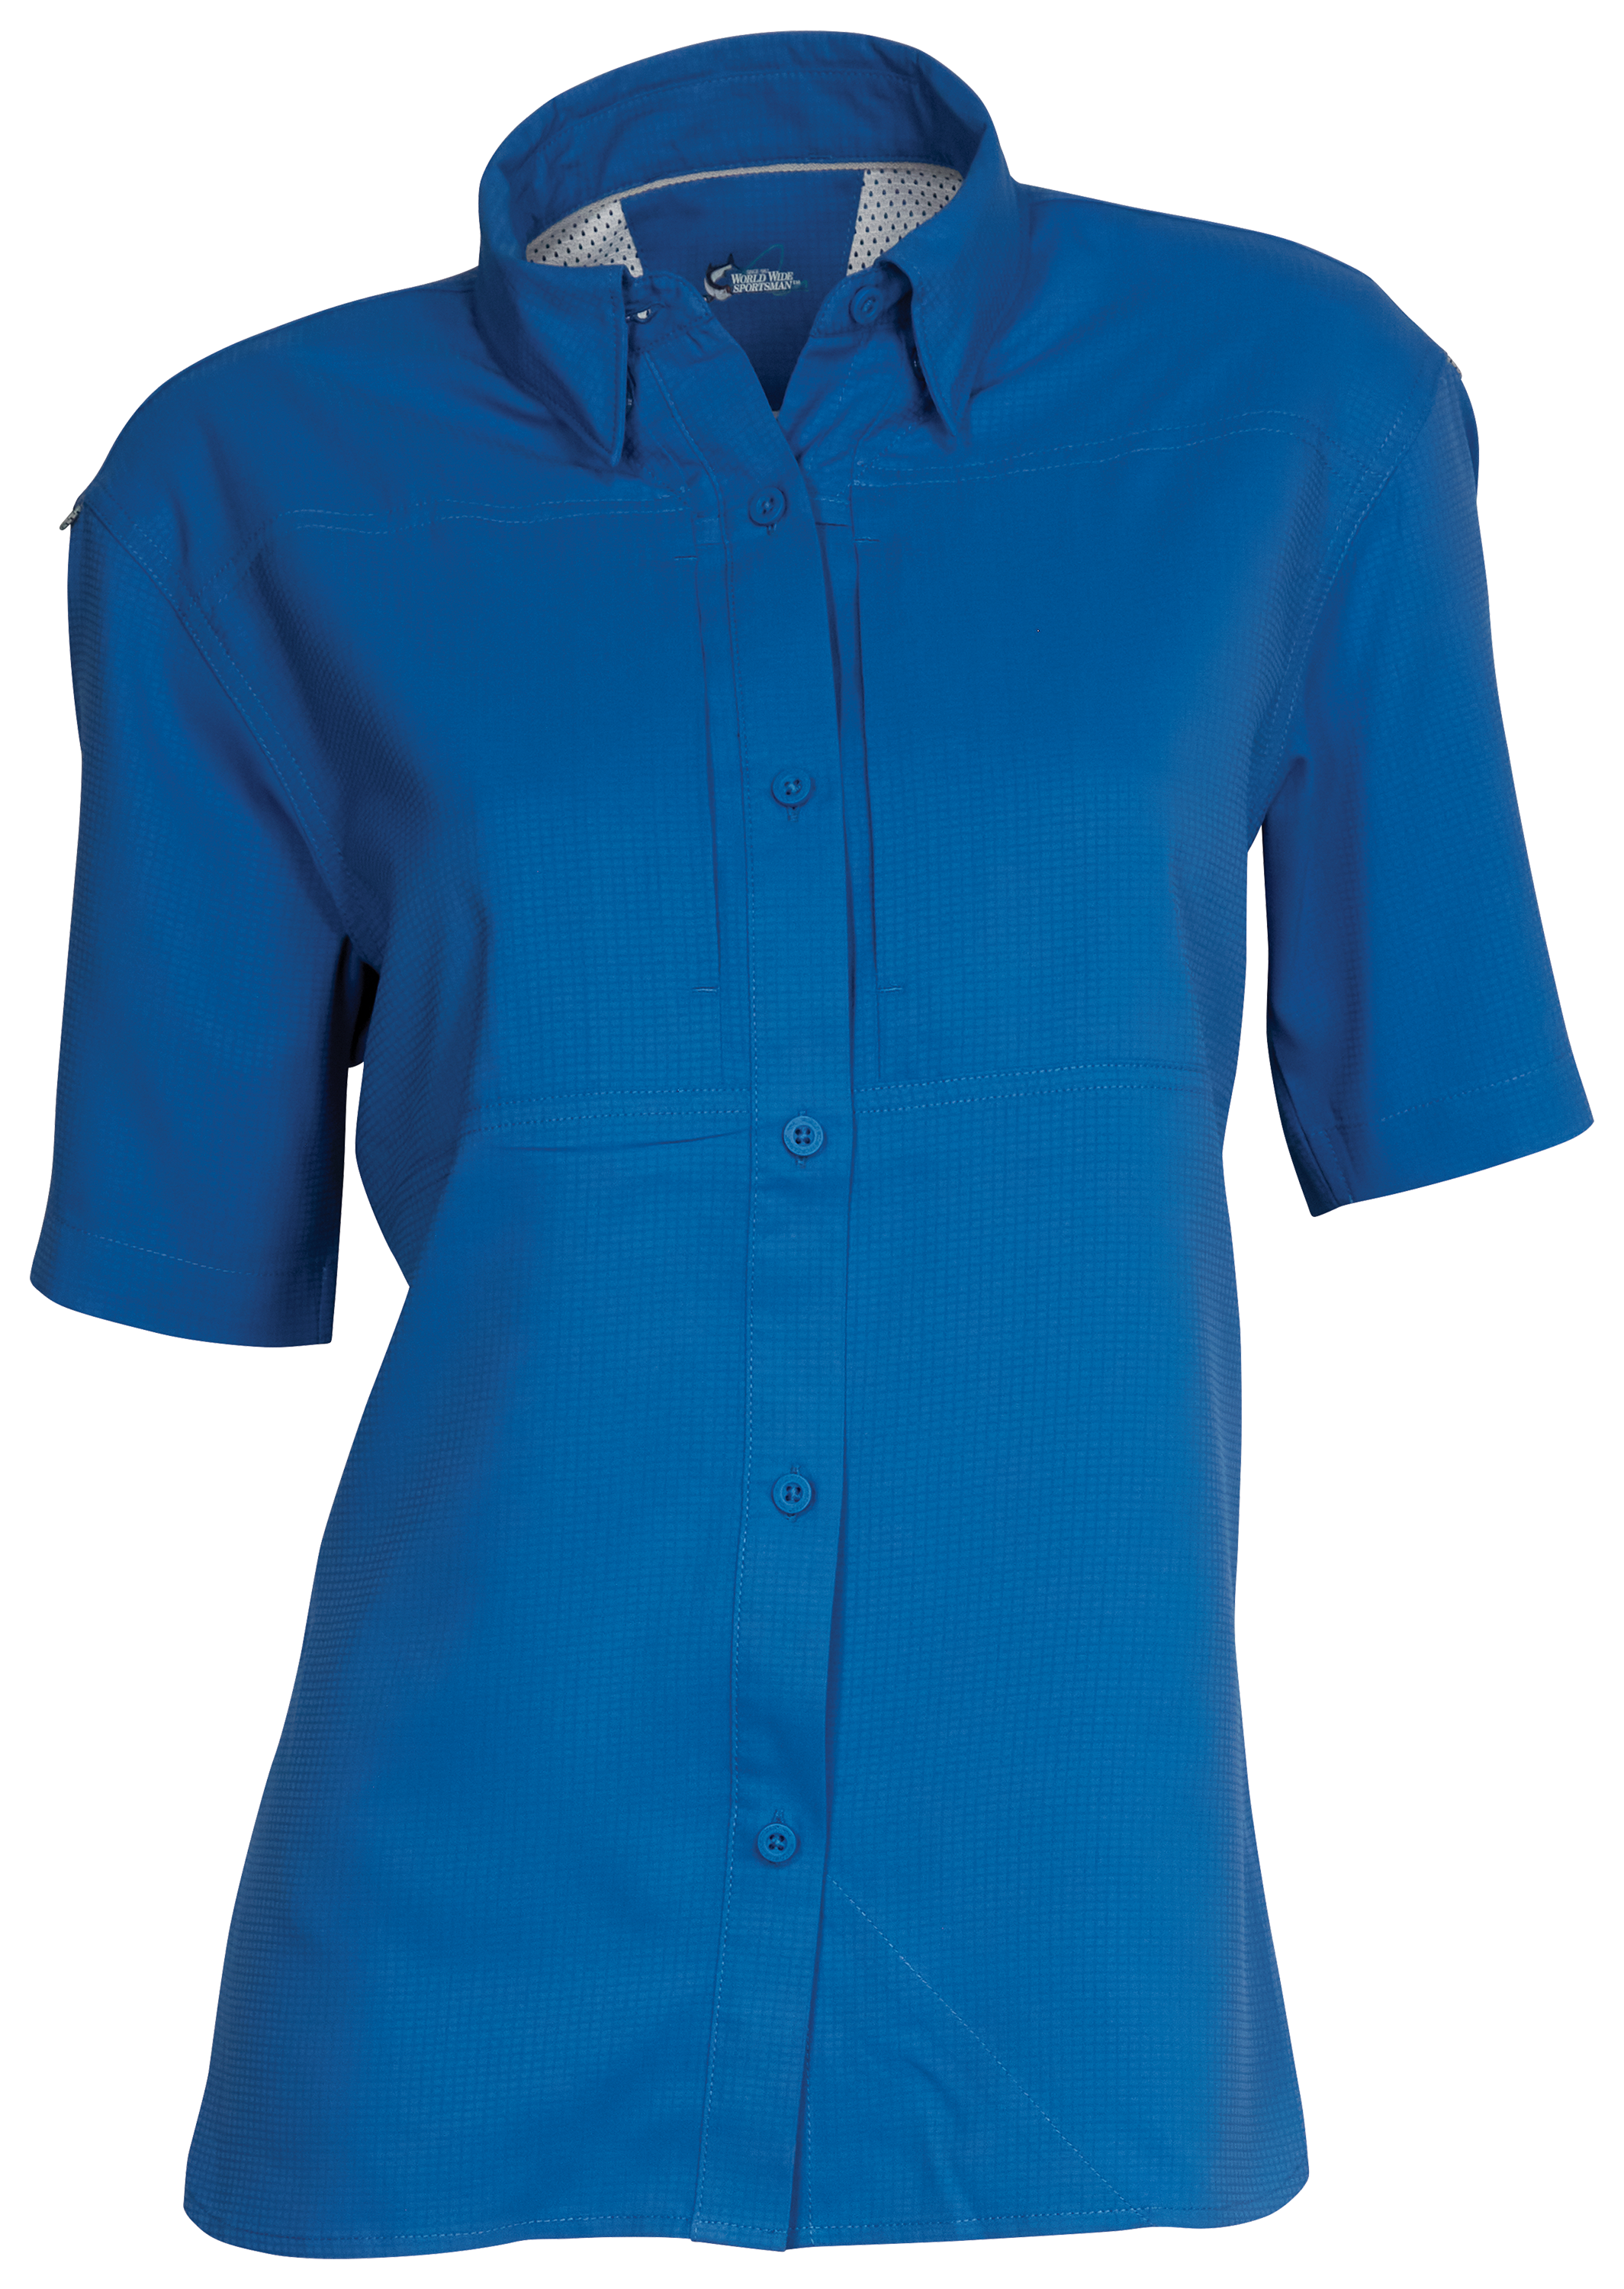 World Wide Sportsman Marina Short-Sleeve Shirt for Ladies - Delft Blue - M